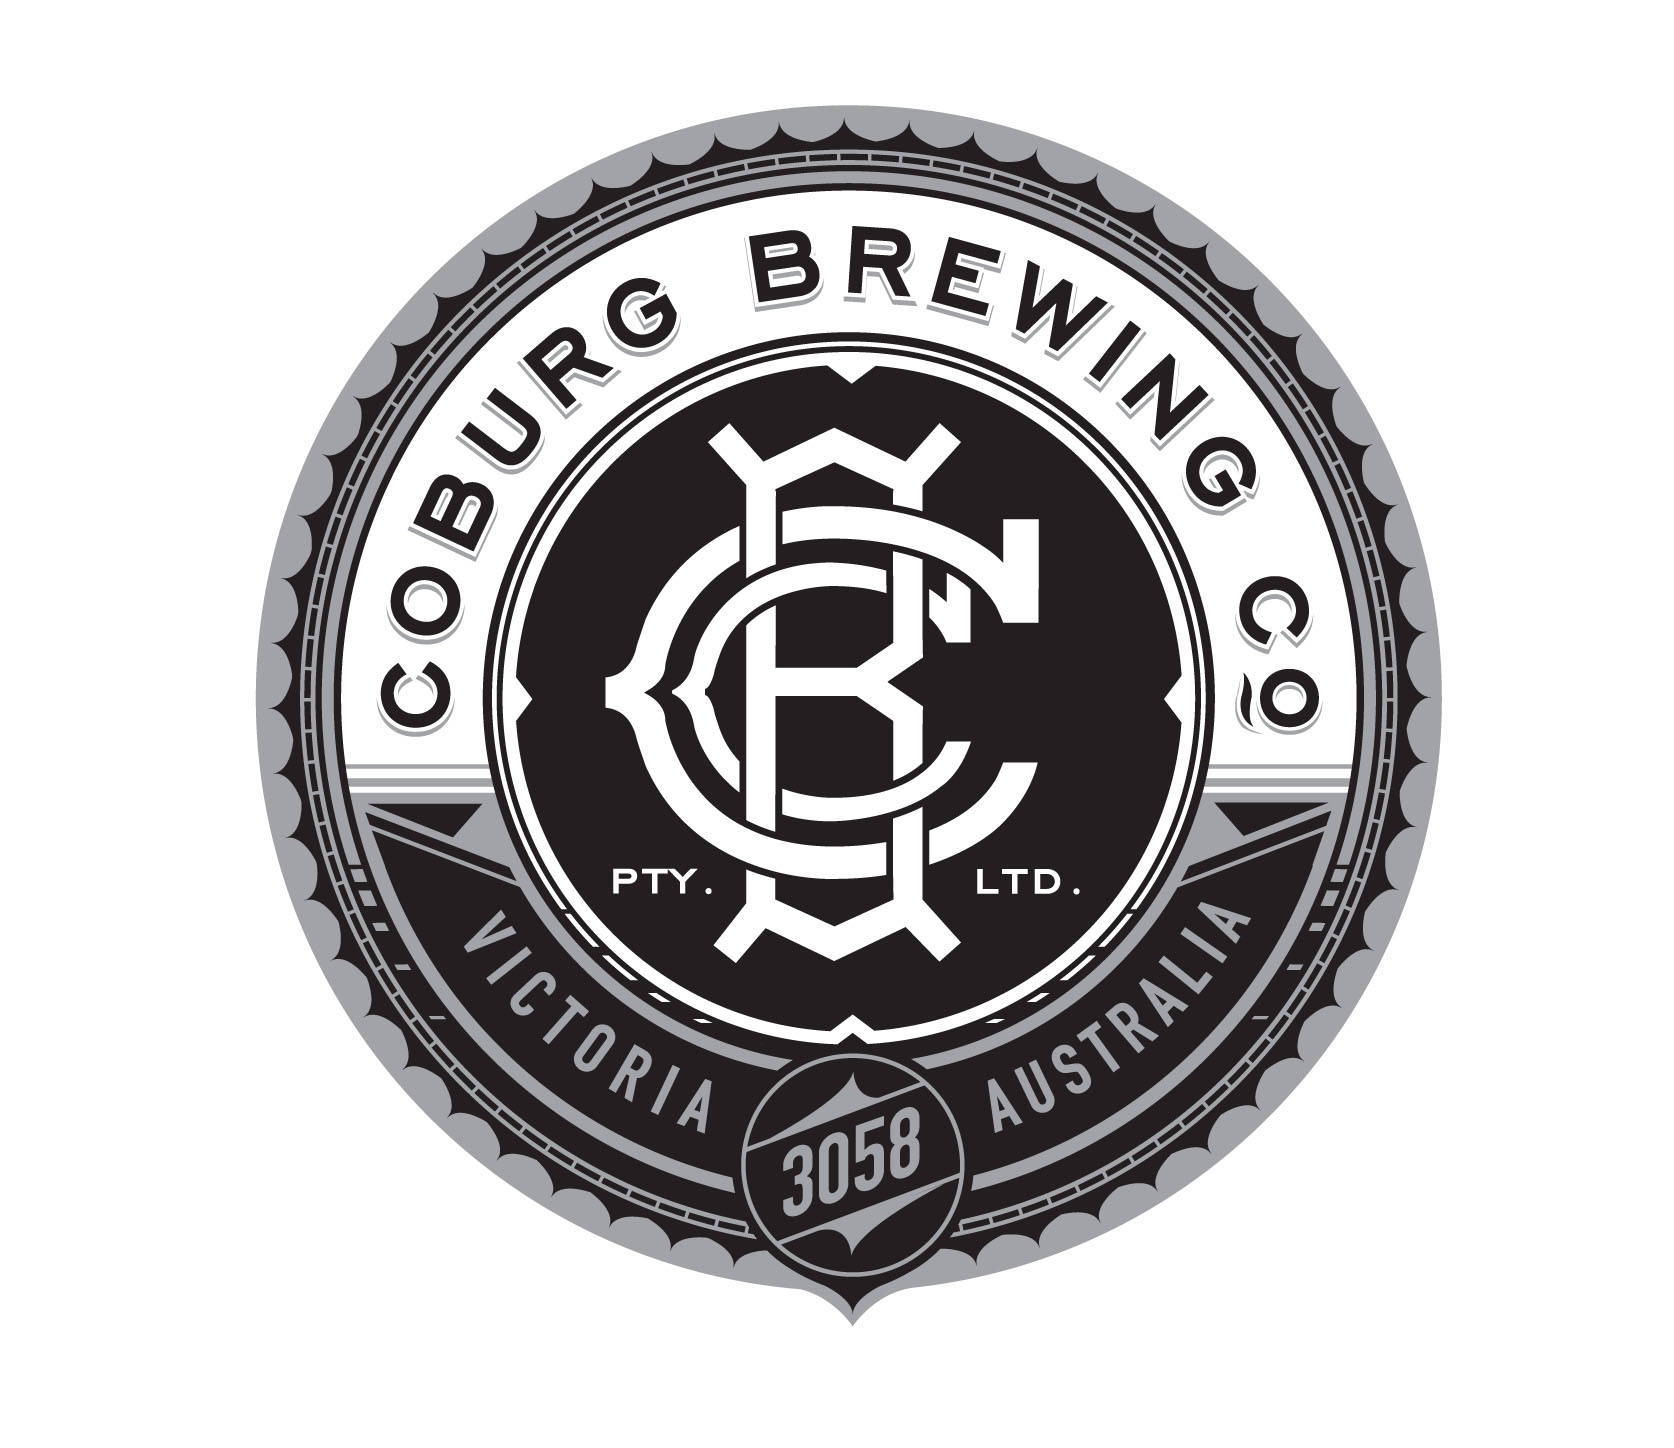 Coburg Brewing Co.